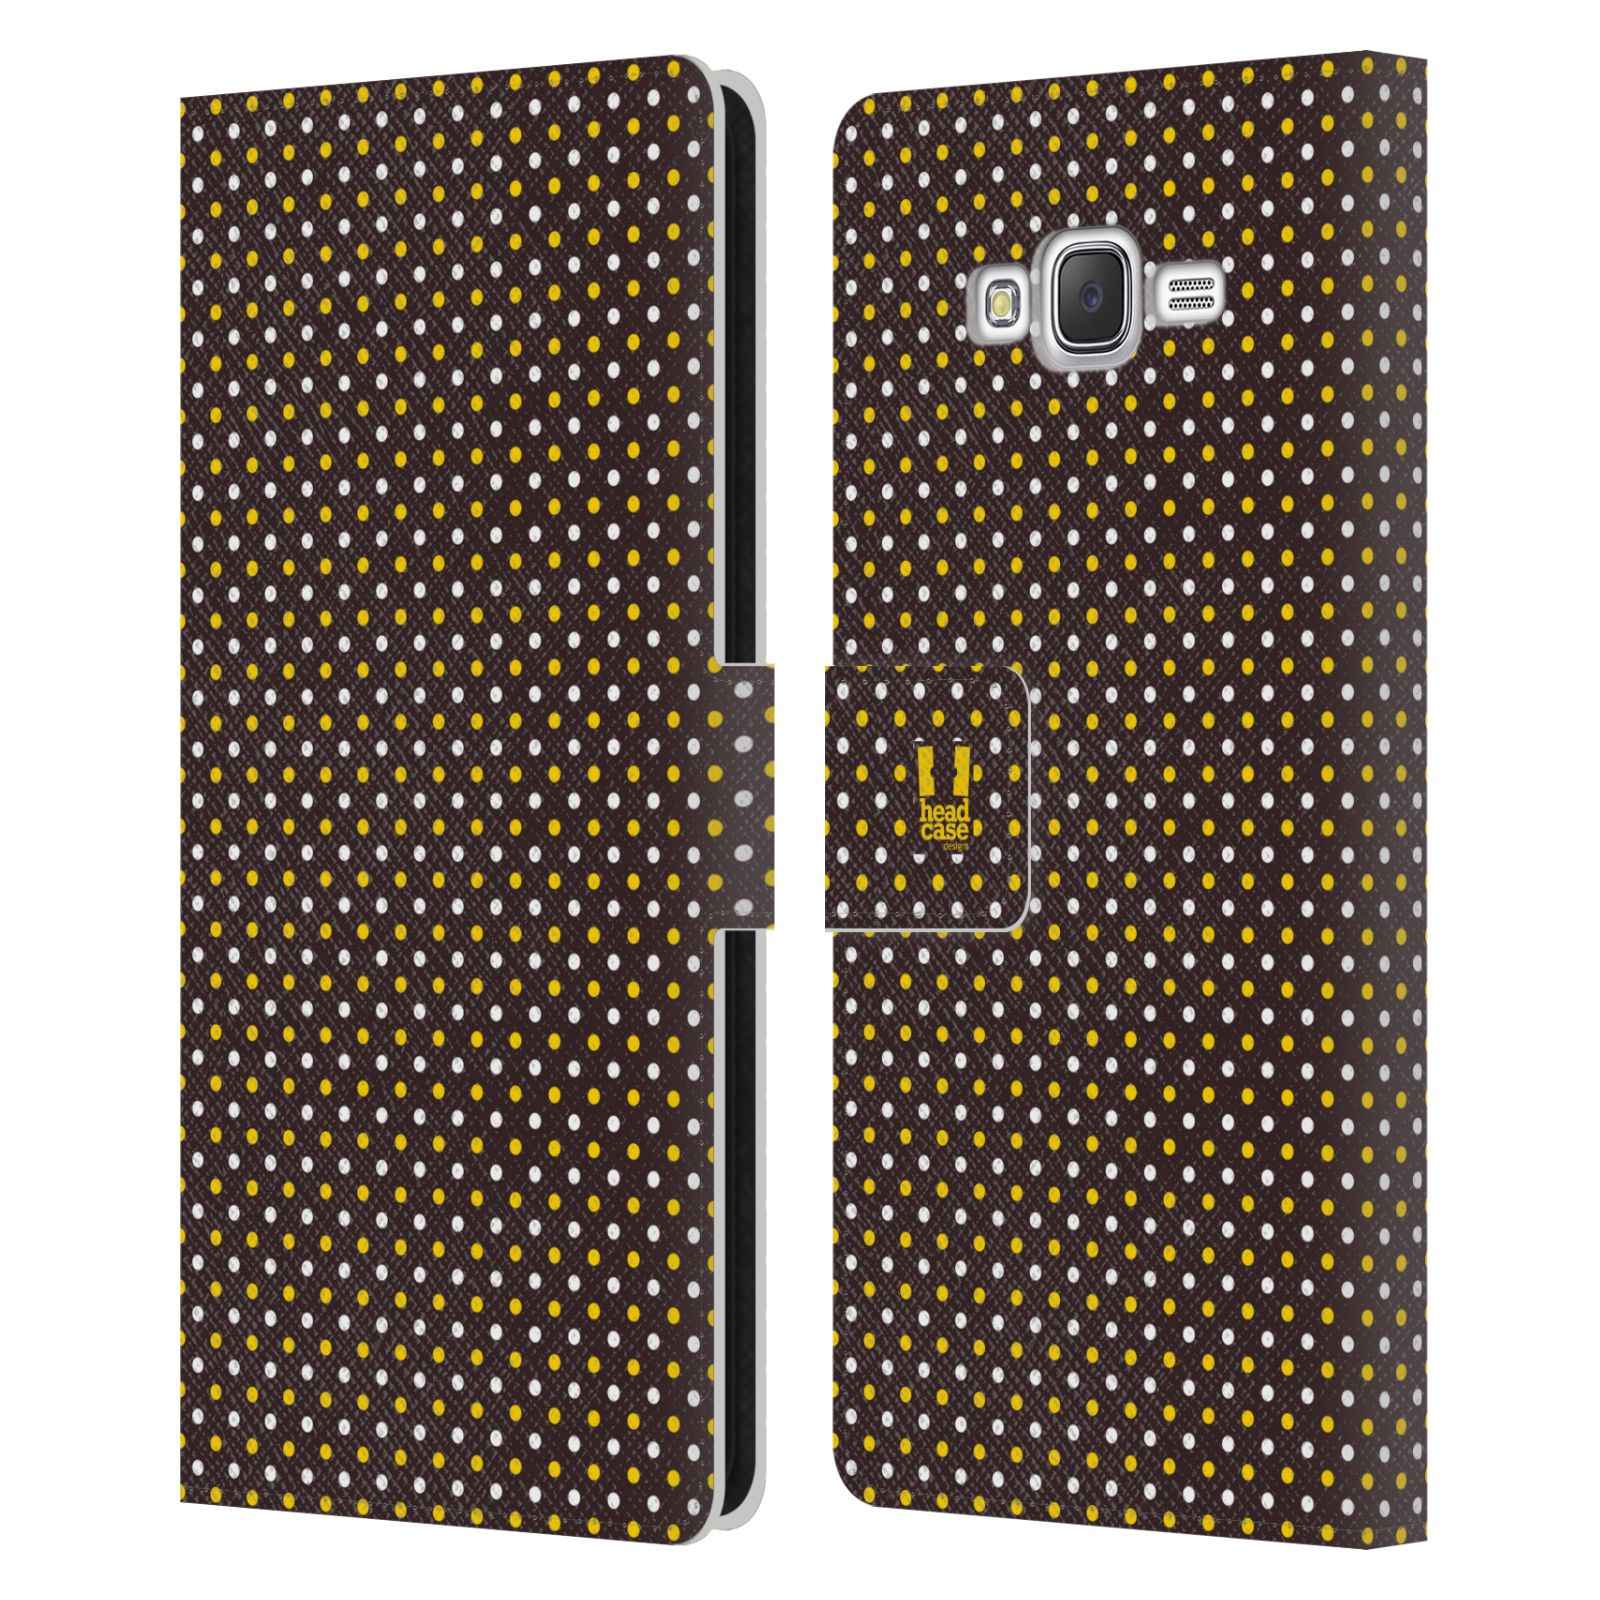 HEAD CASE Flipové pouzdro pro mobil Samsung Galaxy J7, J700 VČELÍ VZOR puntíky hnědá a žlutá